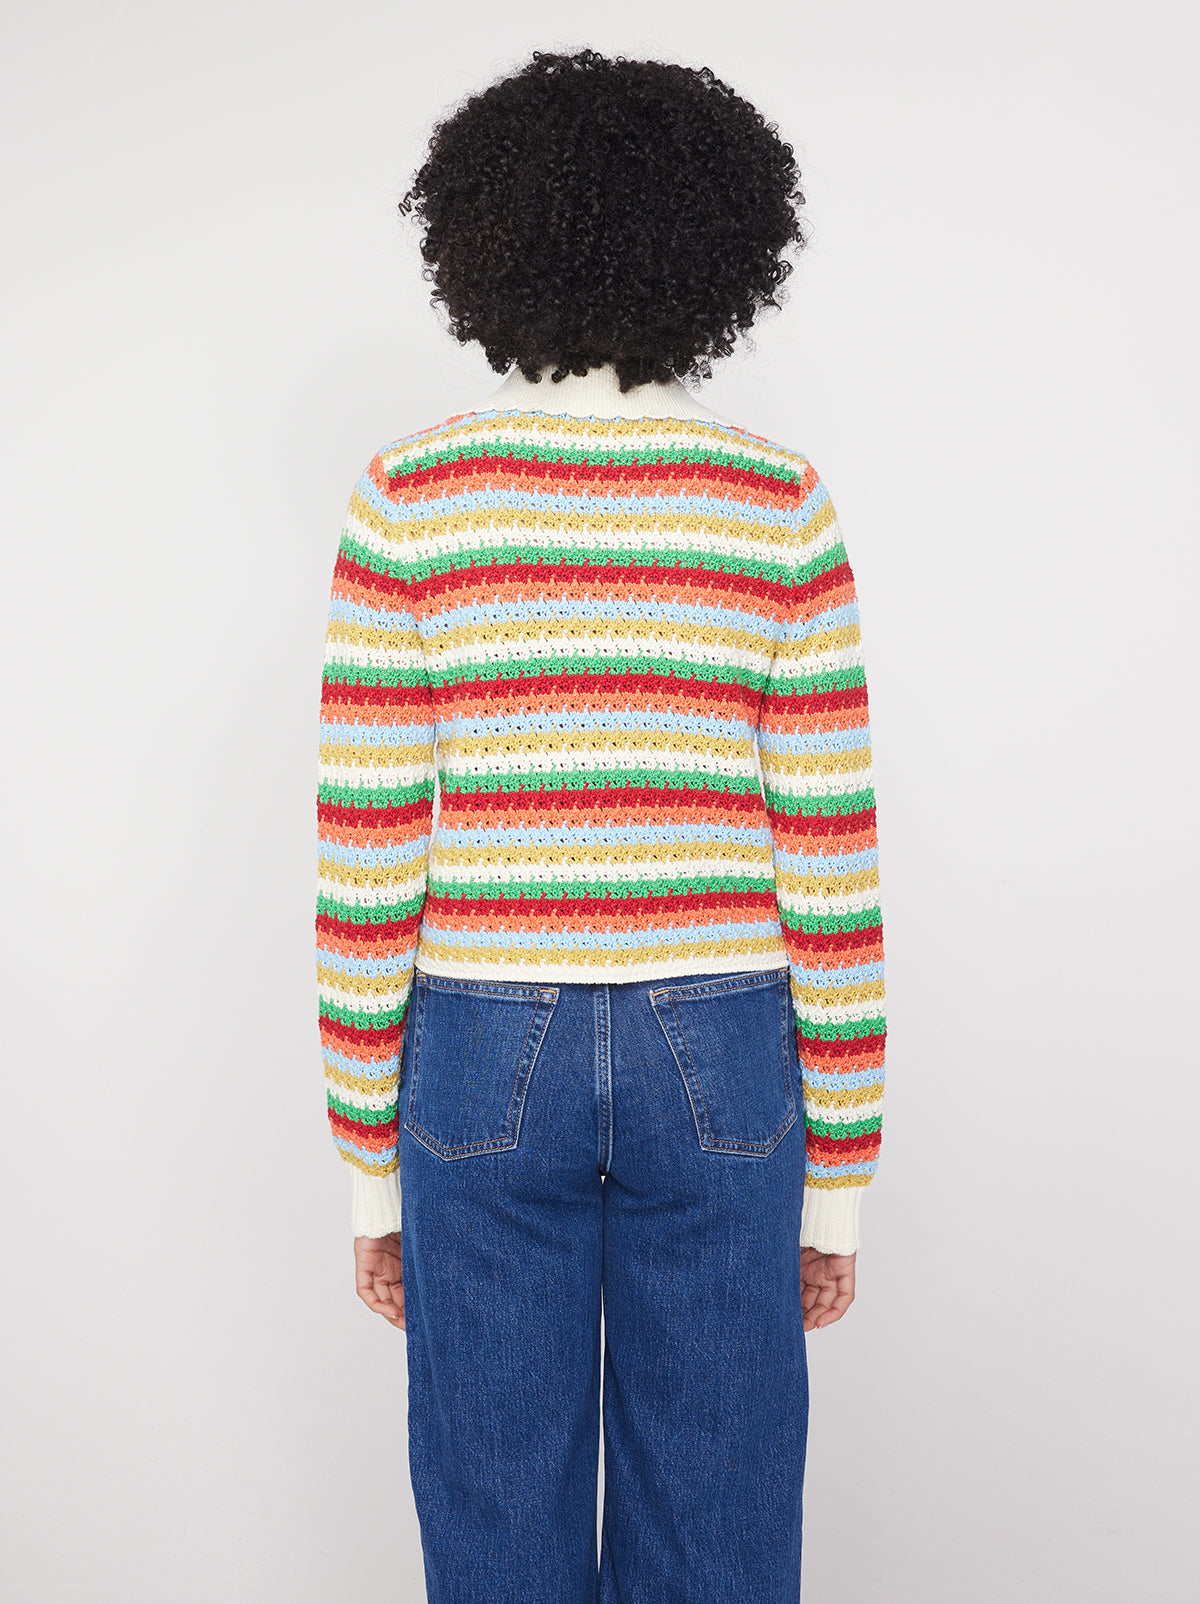 Evie Blue Multi Crochet Knit Cardigan By KITRI Studio